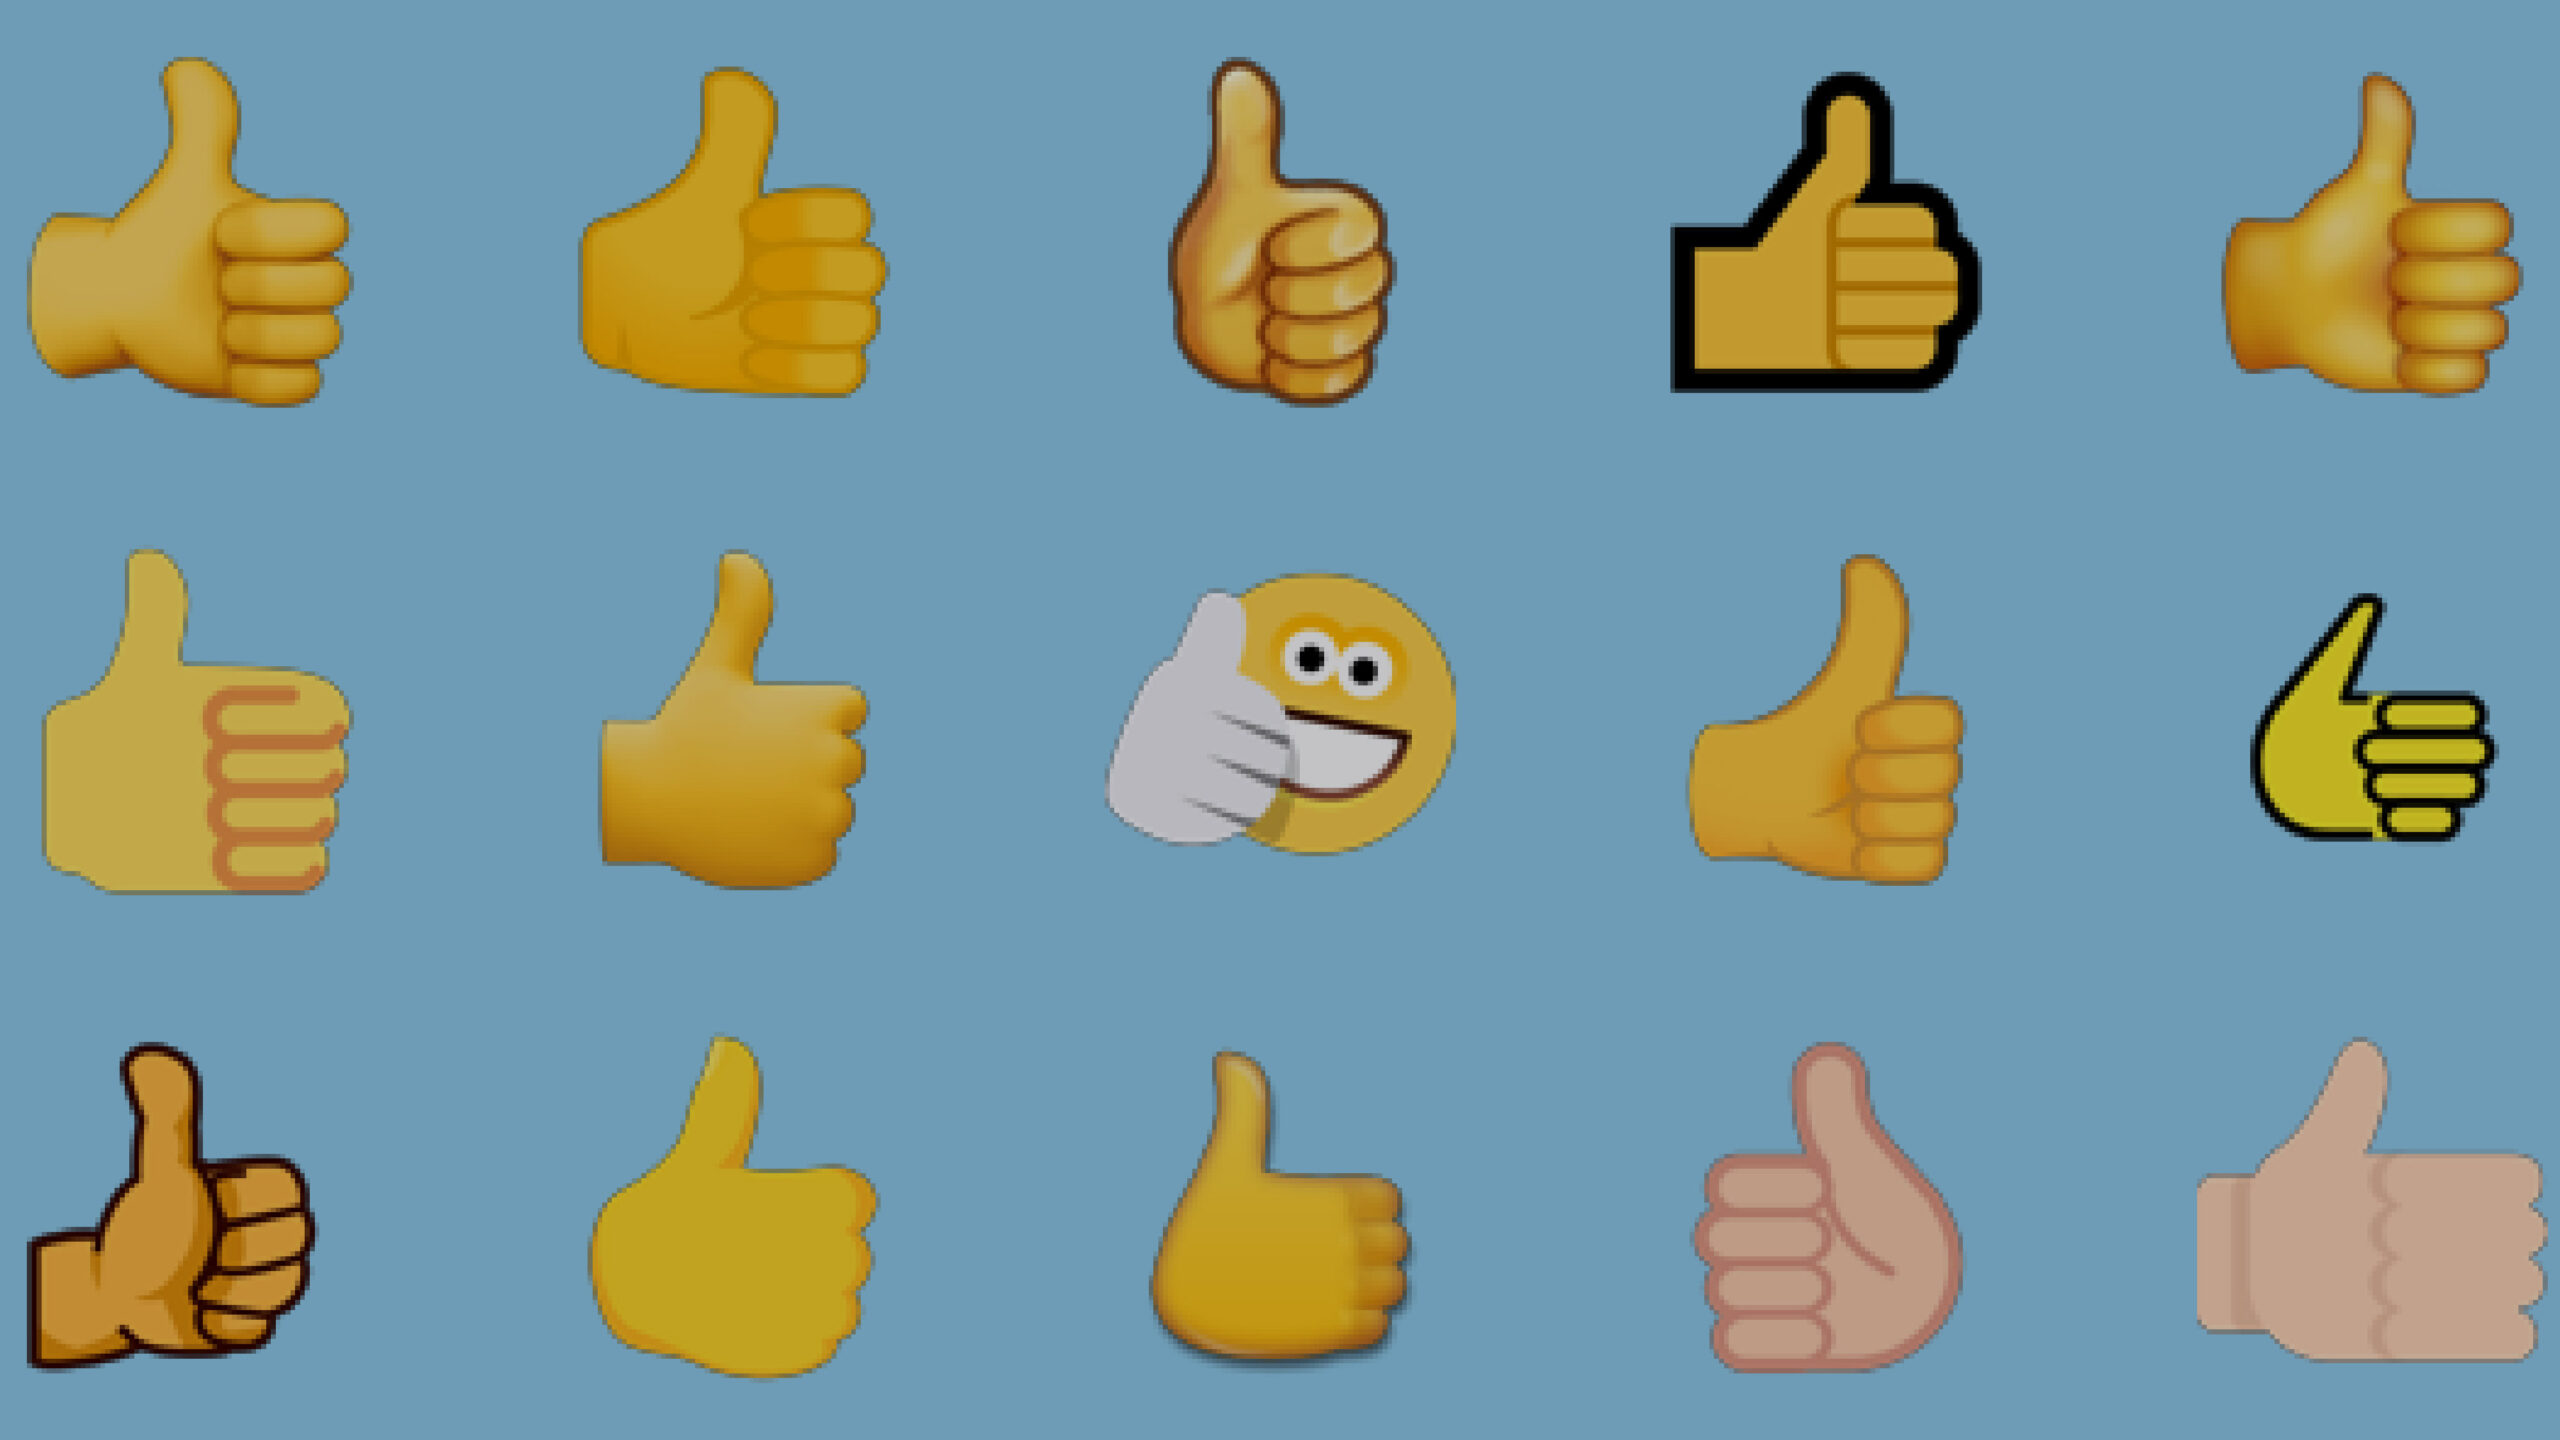 Thumbs-up Emoji a Consent?